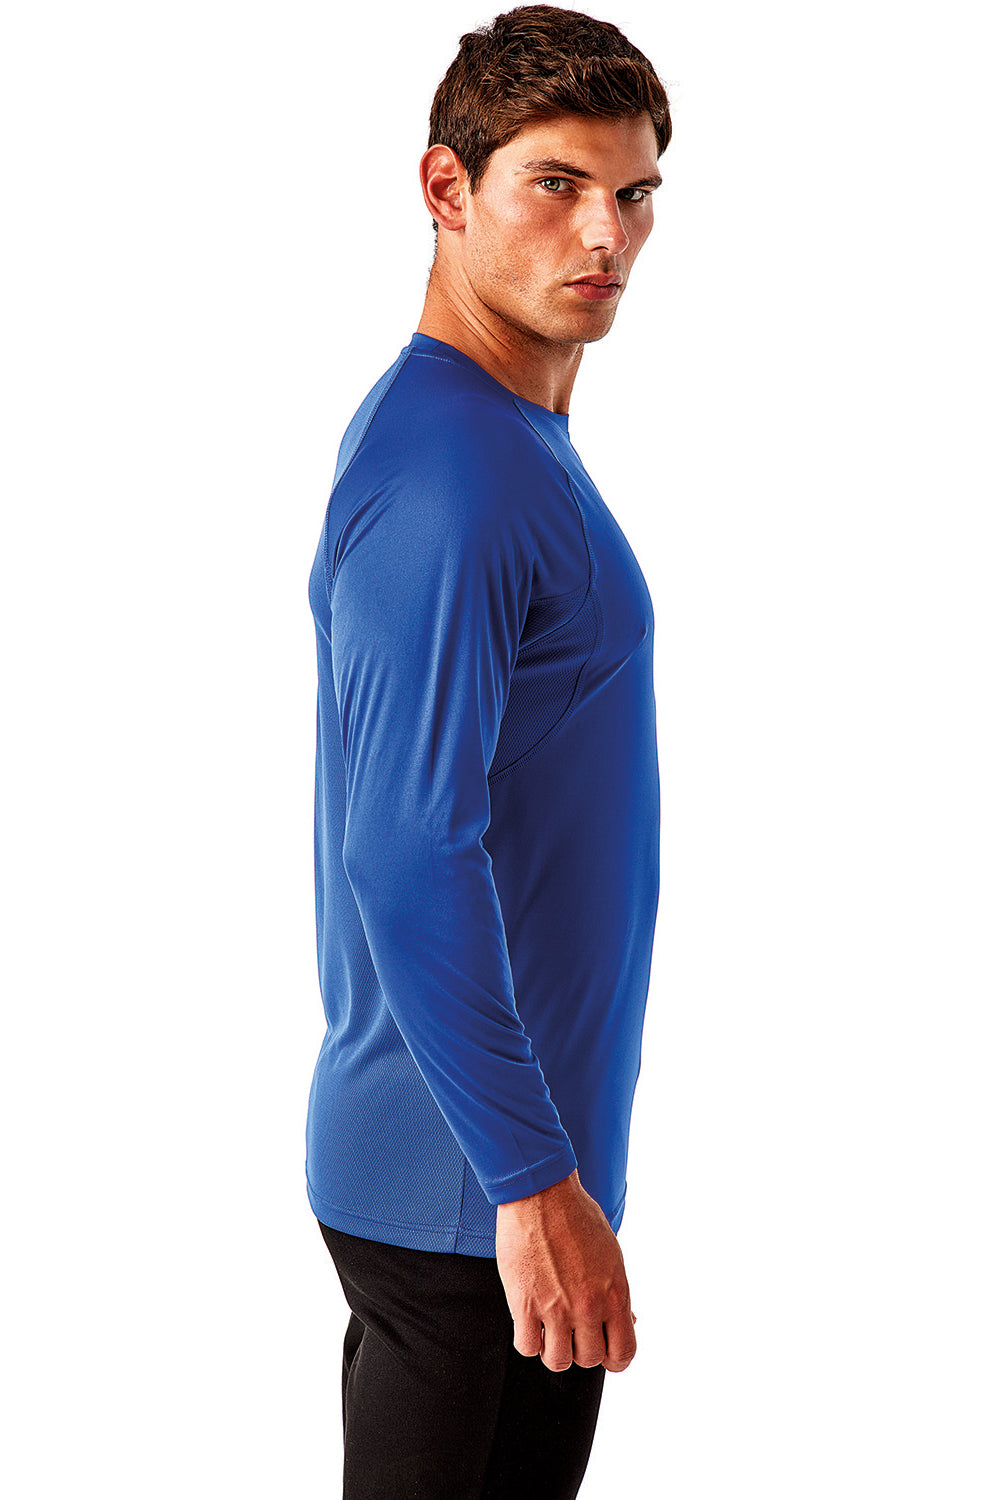 TriDri TD050 Mens Panelled Tech Moisture Wicking Long Sleeve Crewneck T-Shirt Royal Blue Side